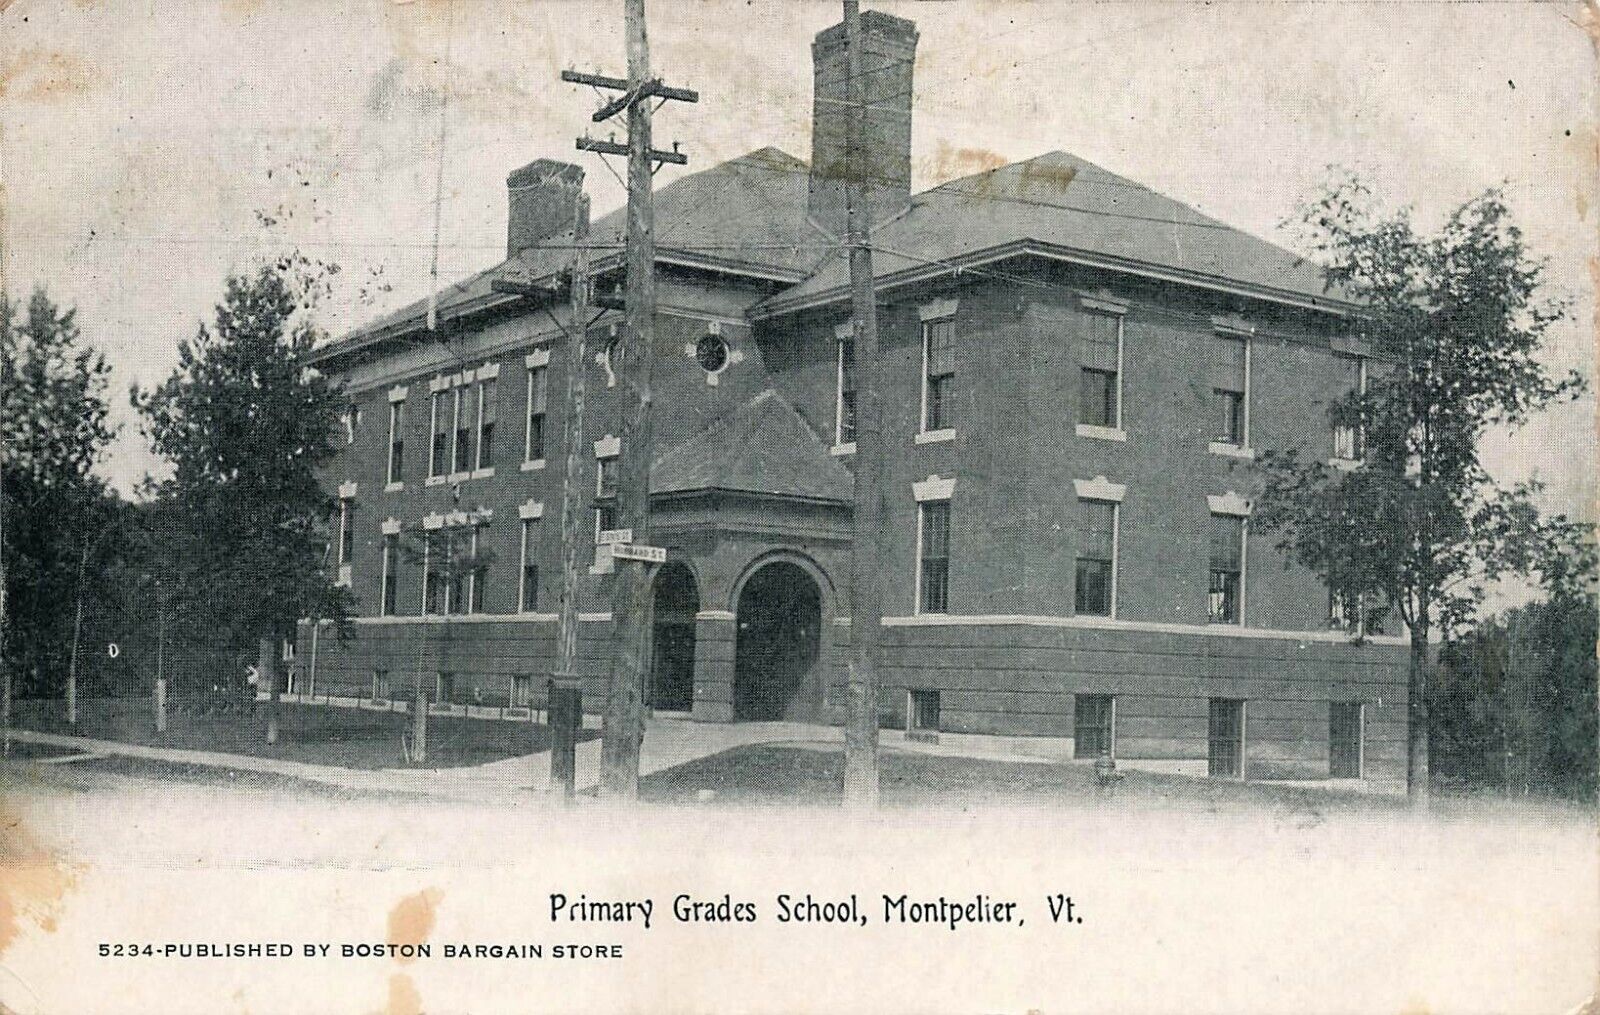 1914 VERMONT PHOTO POSTCARD: PRIMARY GRADES SCHOOL BUILDING, MONTPELIER, VT